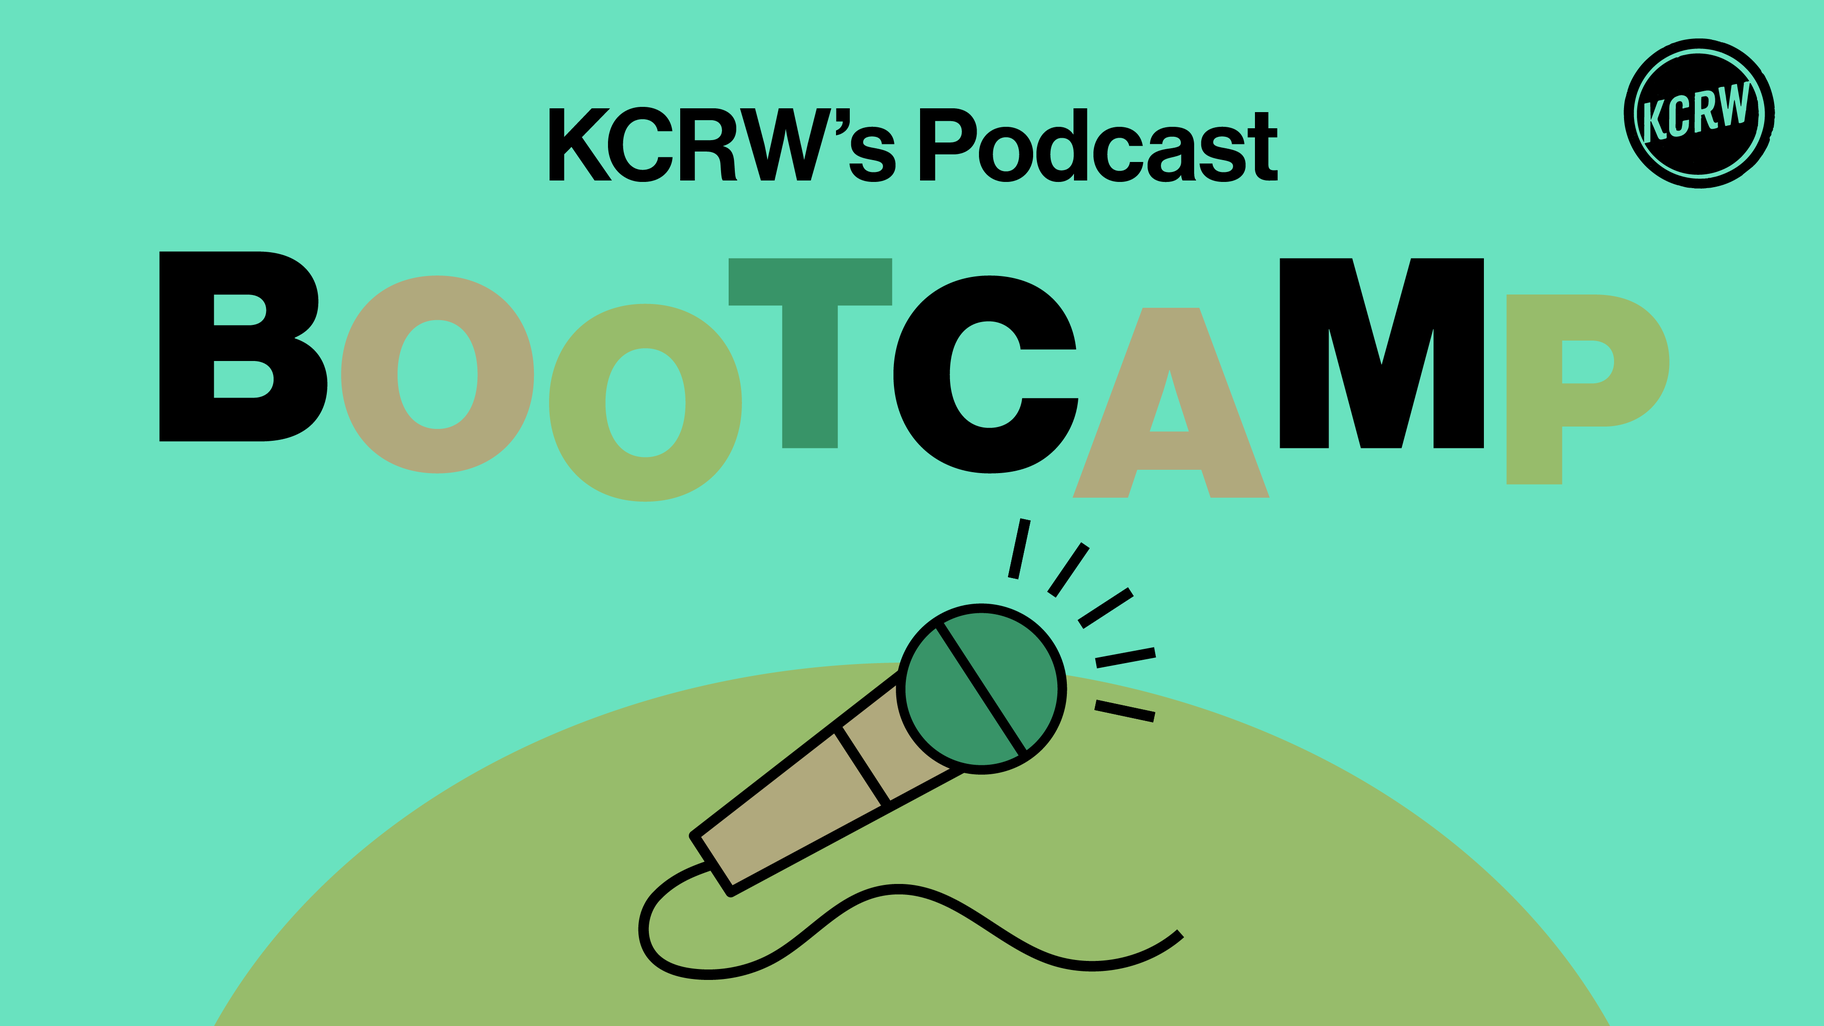 KCRW's Podcast Bootcamp